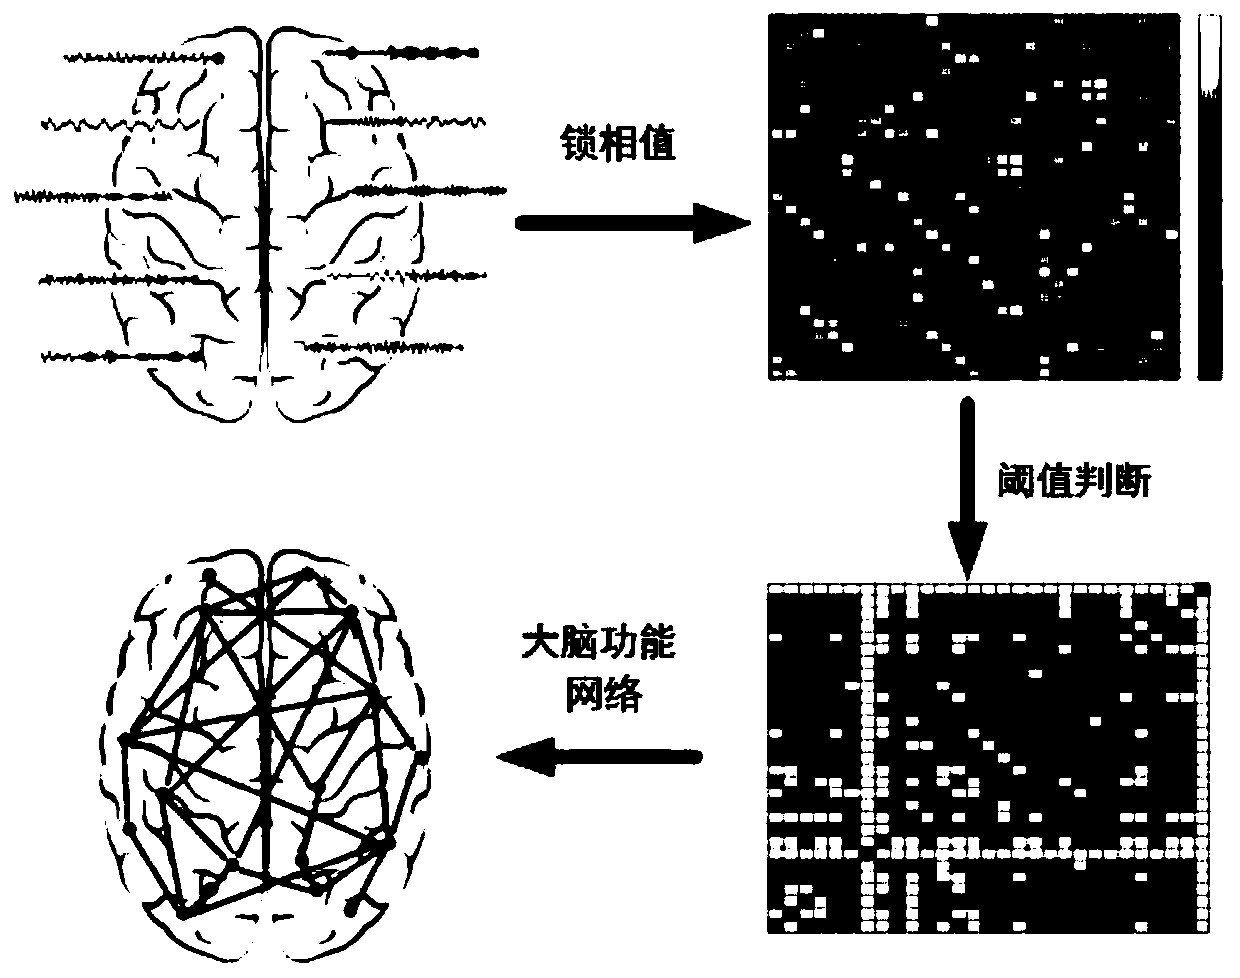 Electroencephalogram signal analysis method based on graph convolutional network